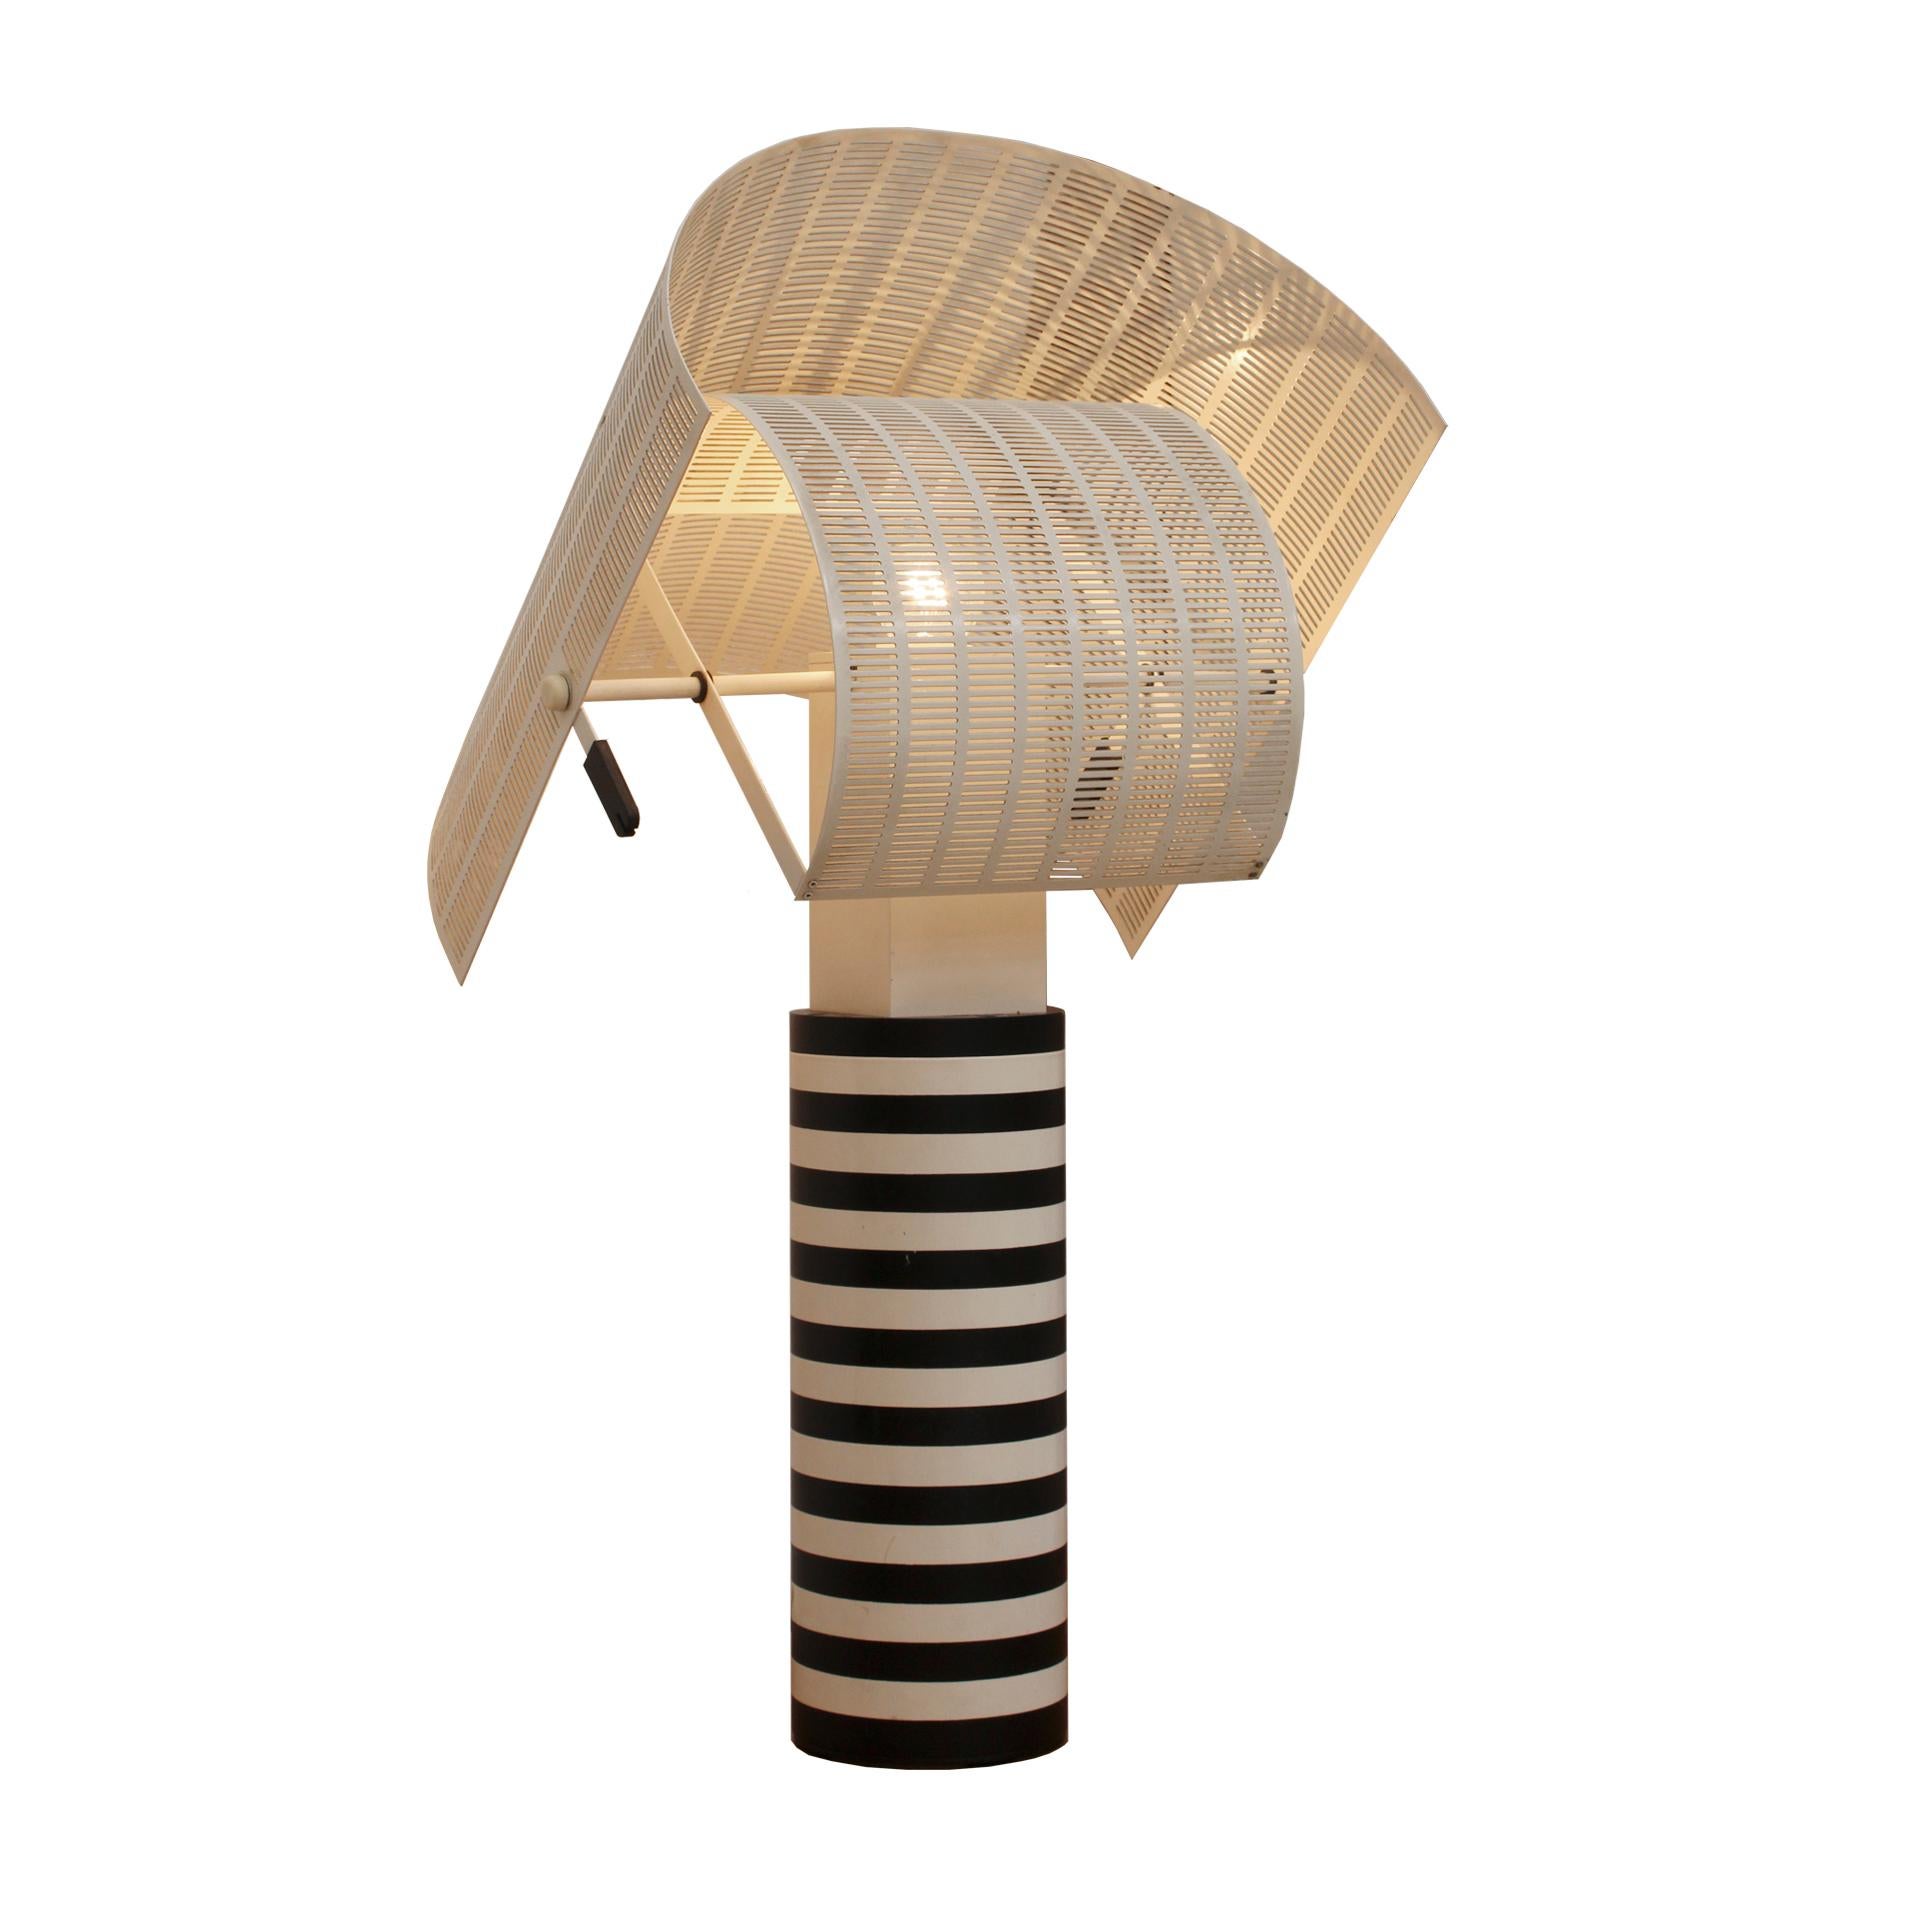 Italian Mid-Century Modern Mod. Shogun Table Lamp Designed by Mario Botta for Artemide For Sale